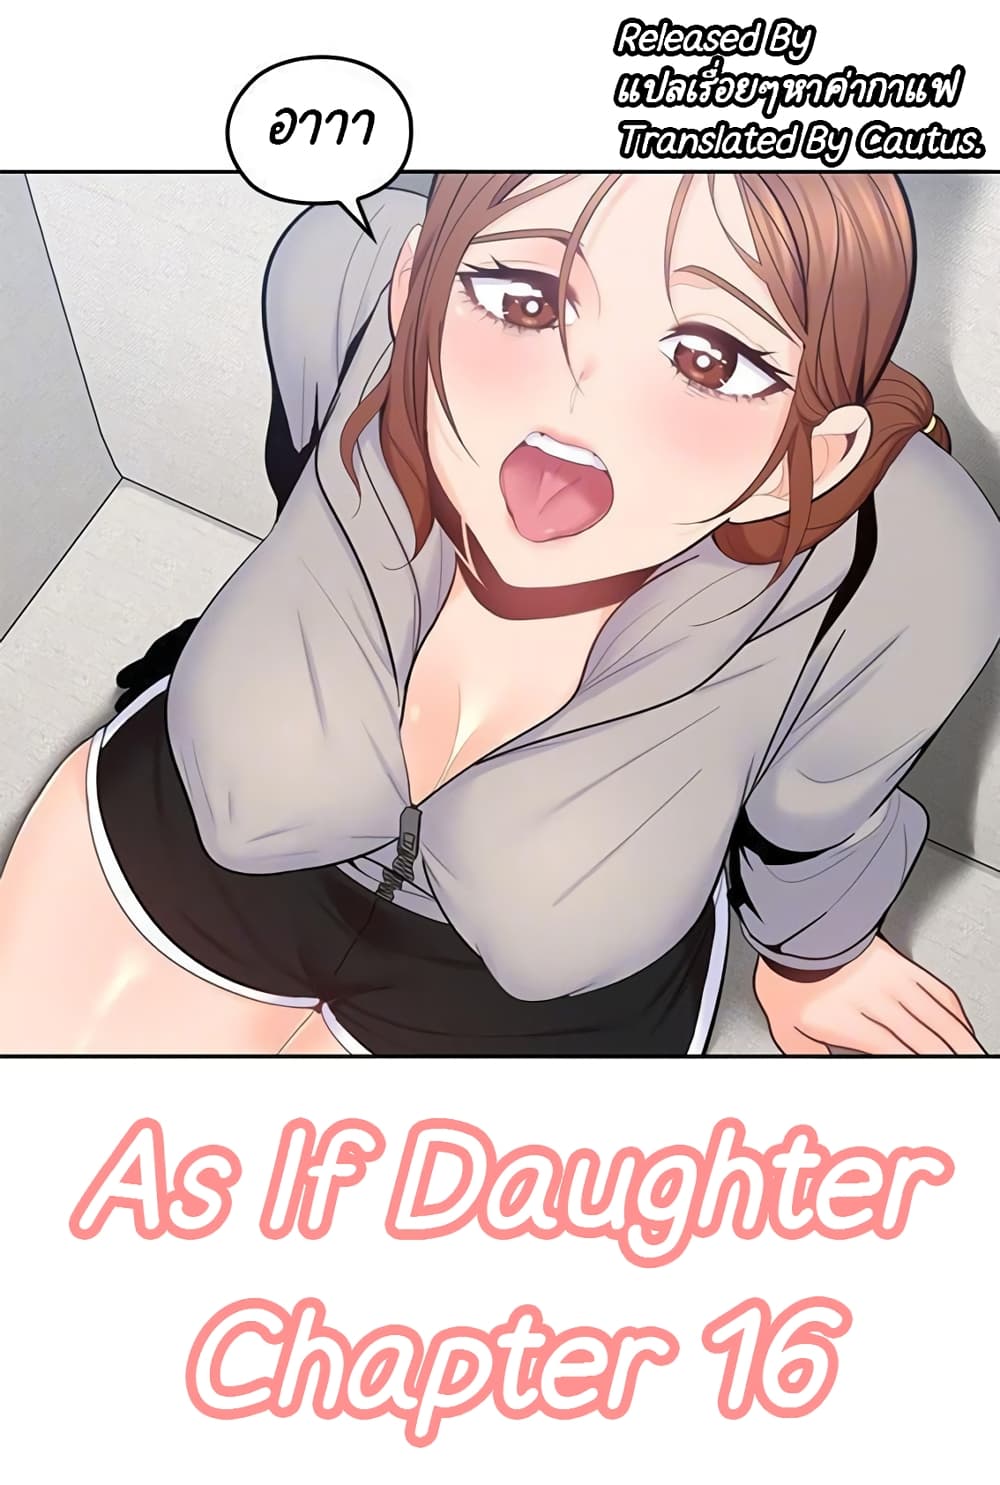 As If Daughter 16-16